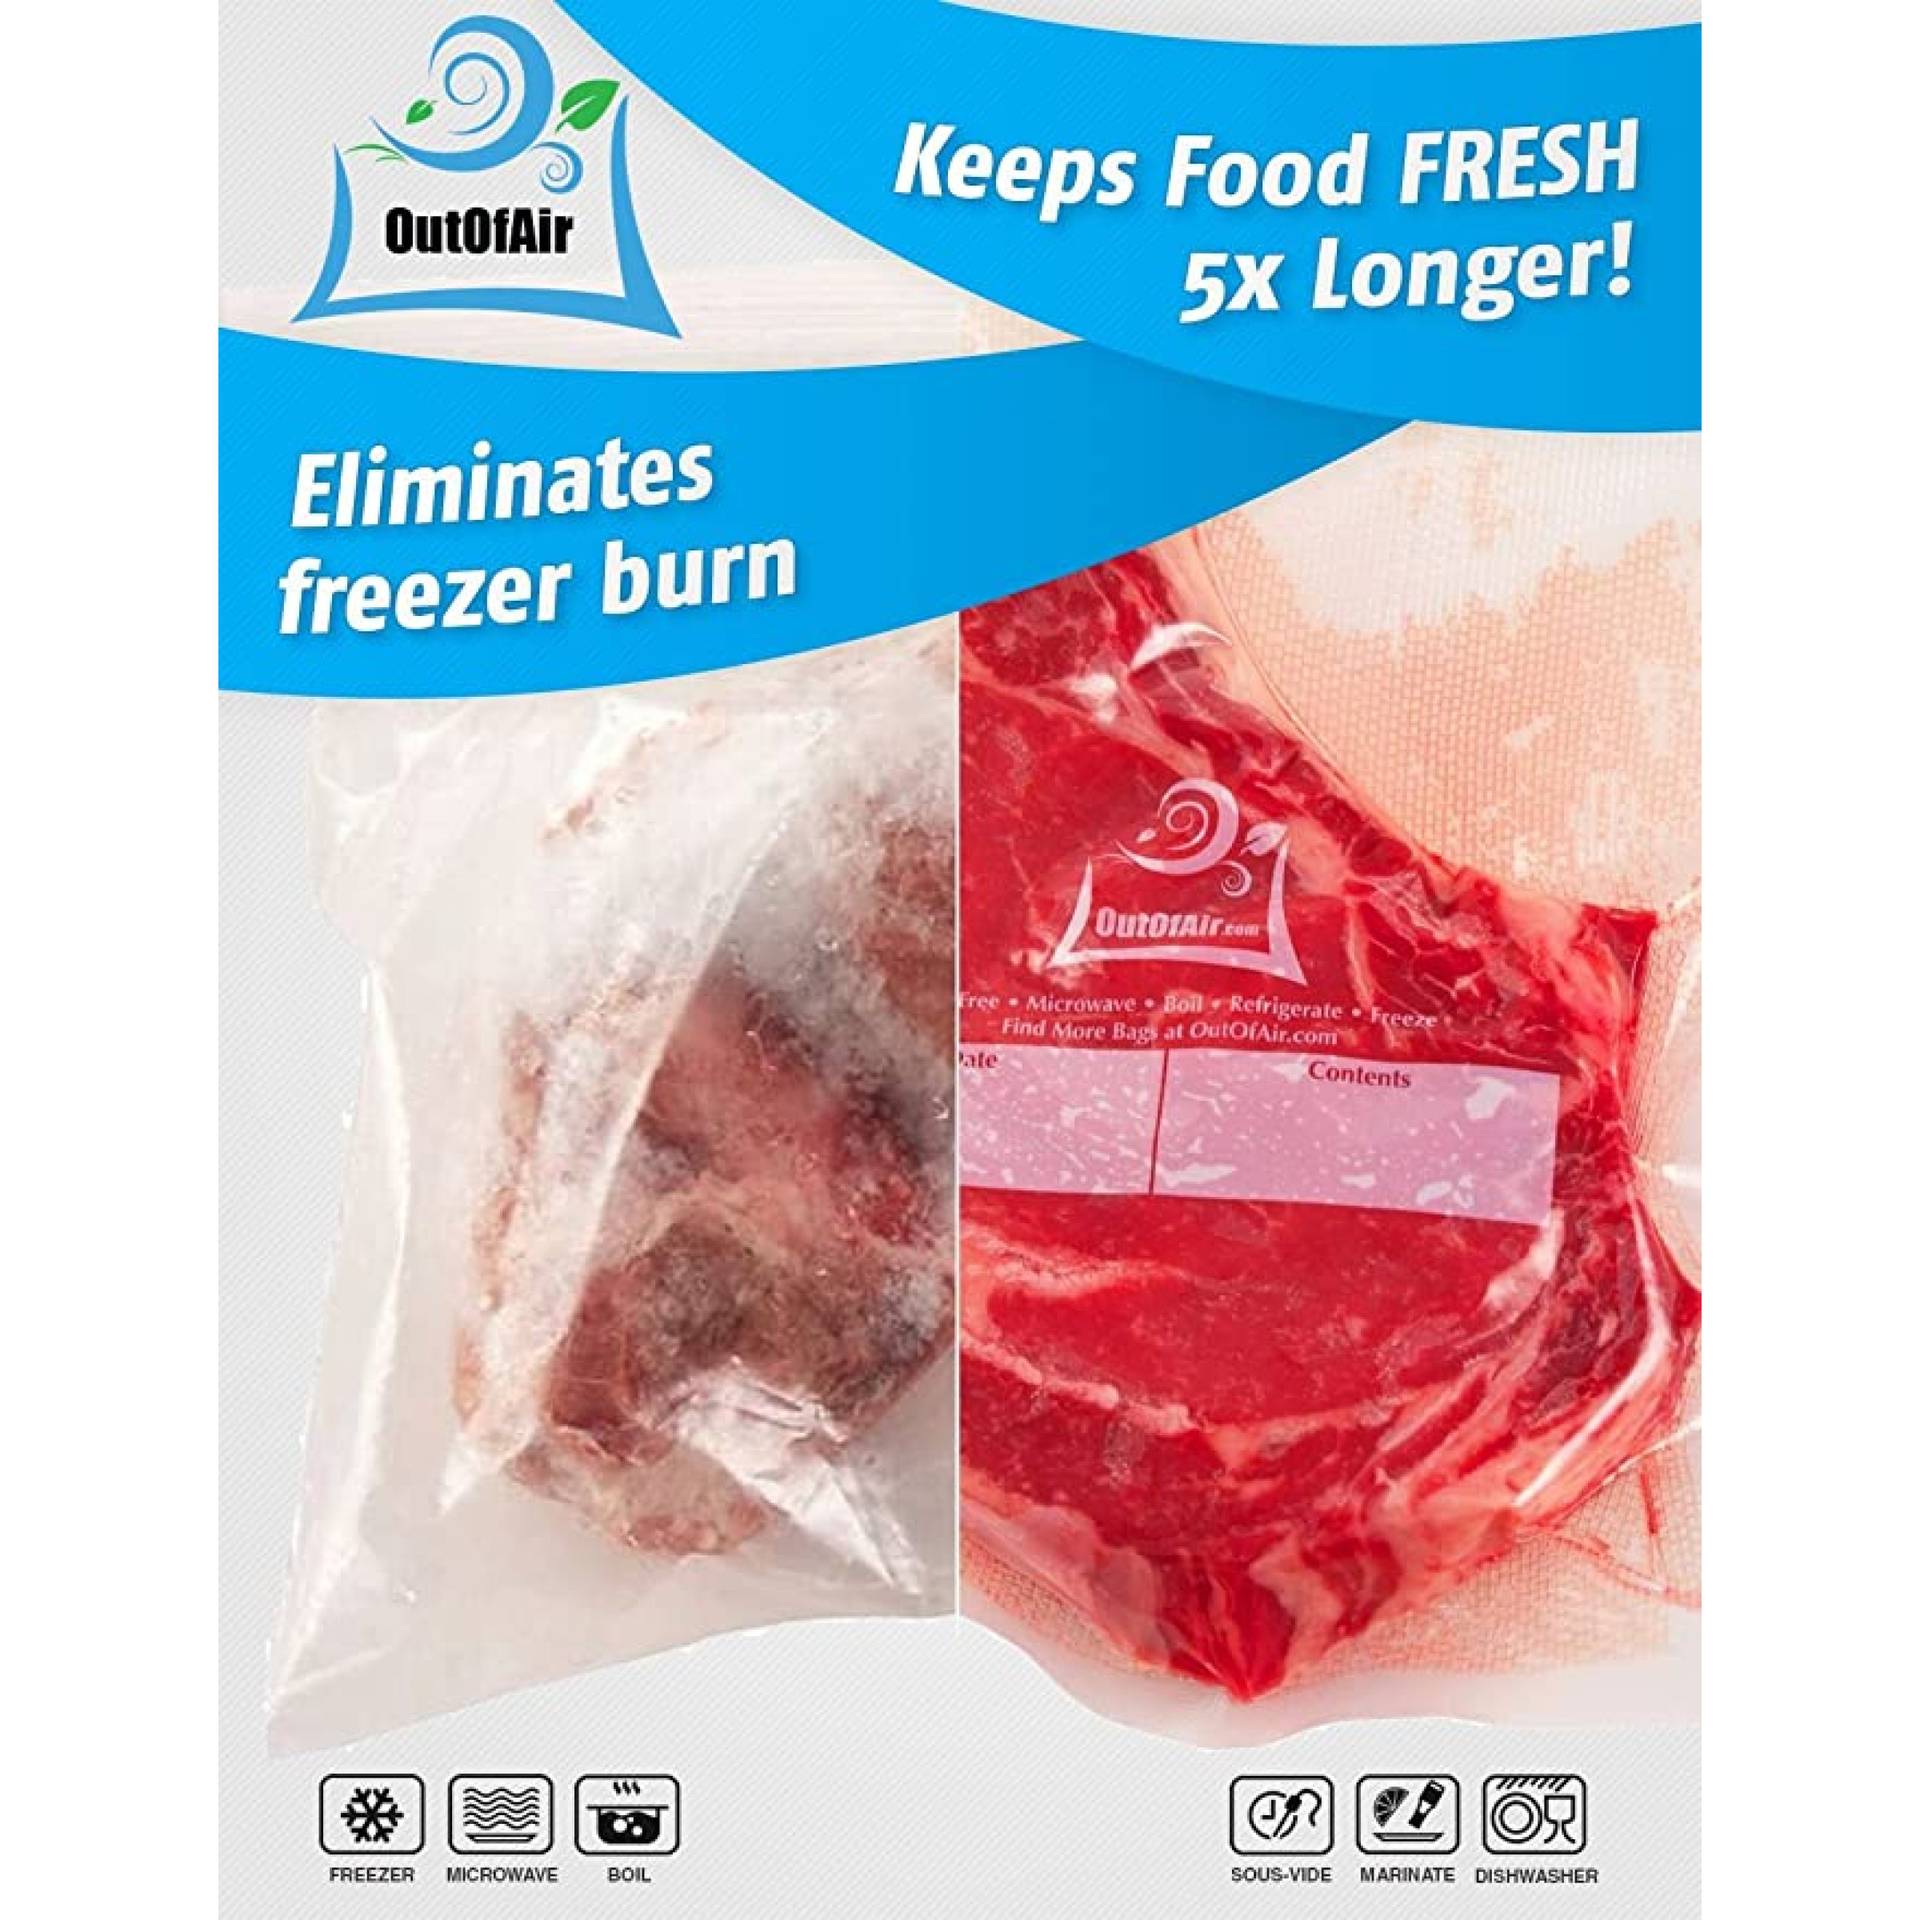 50 - FoodVacBags Reusable 11 X 16 Clear Zipper Gallon Sized Vacuum Seal  Bags 